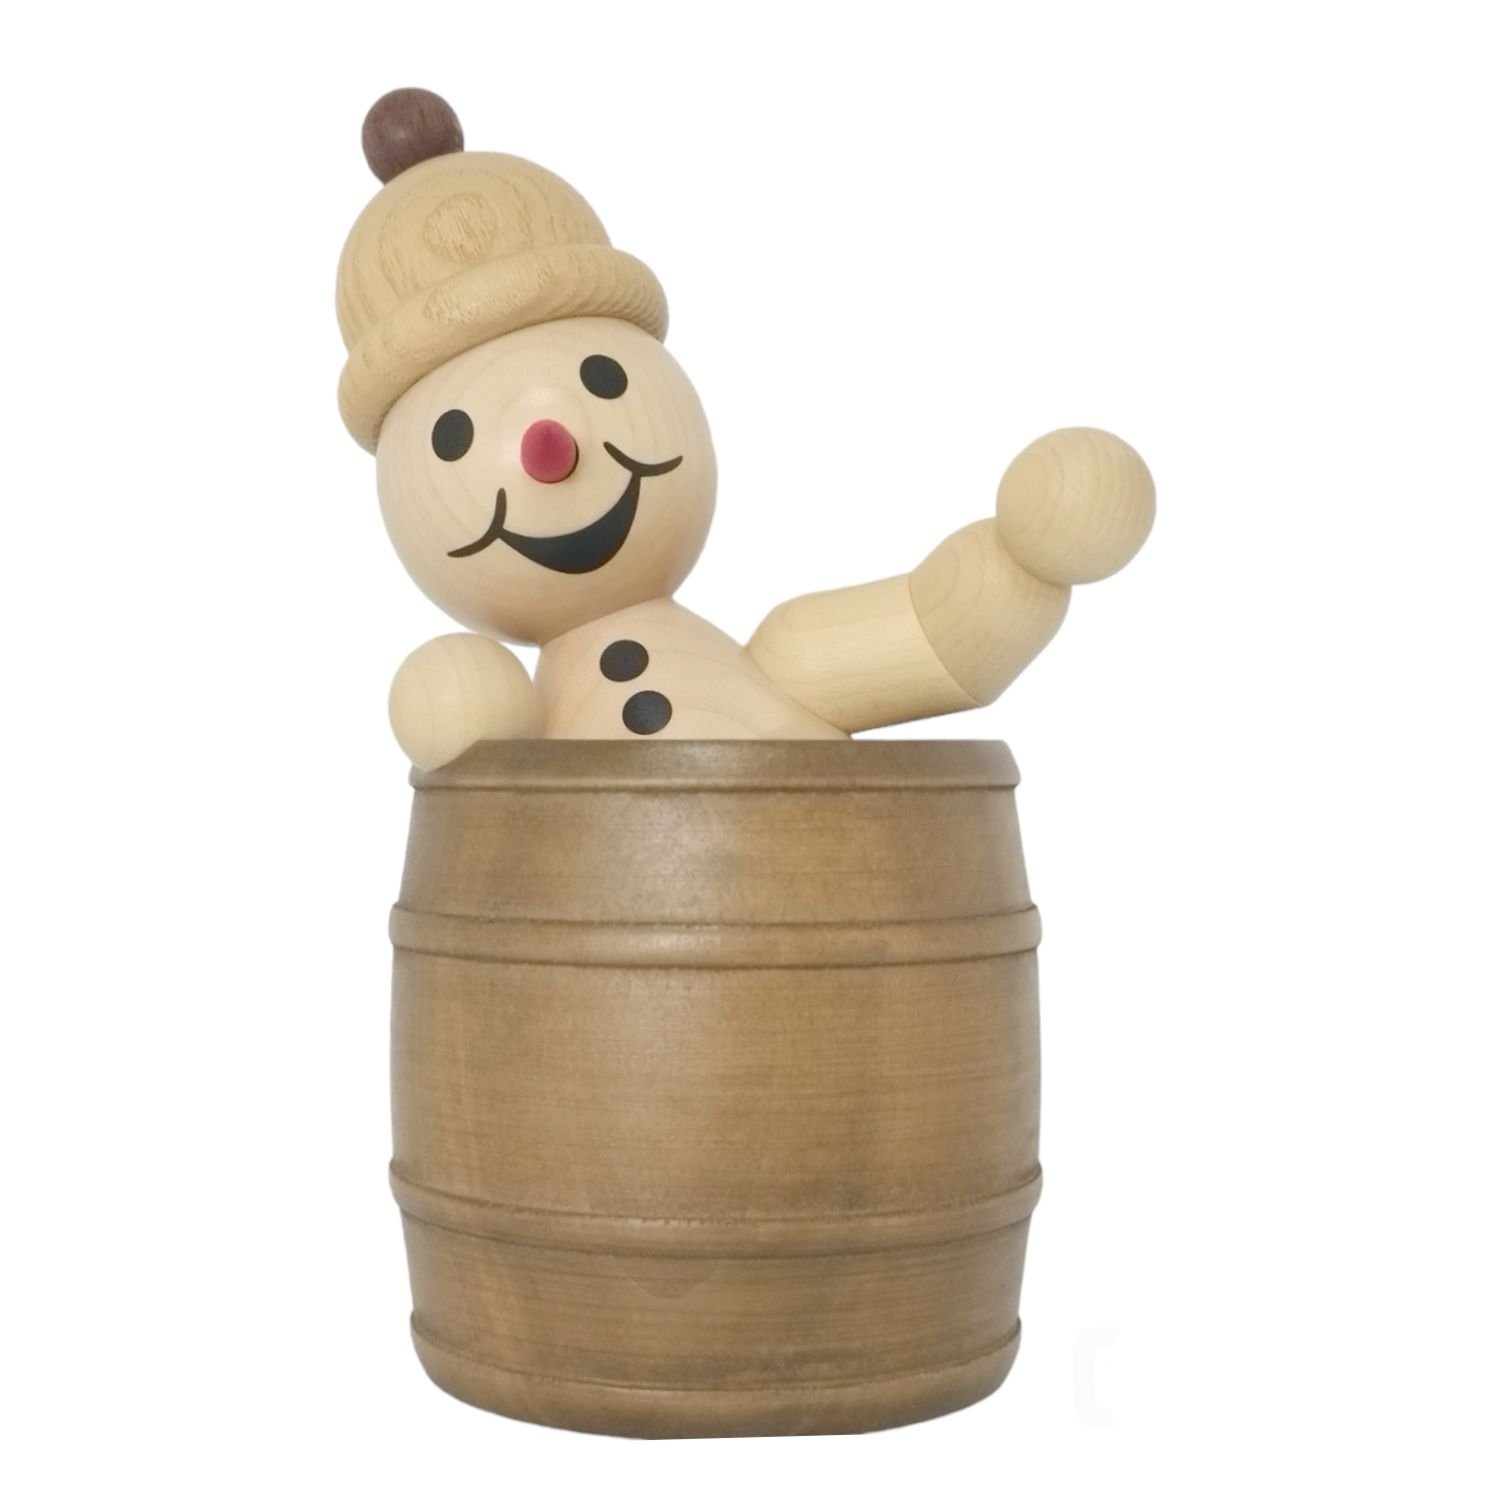 Snowman Junior in a barrel, medium